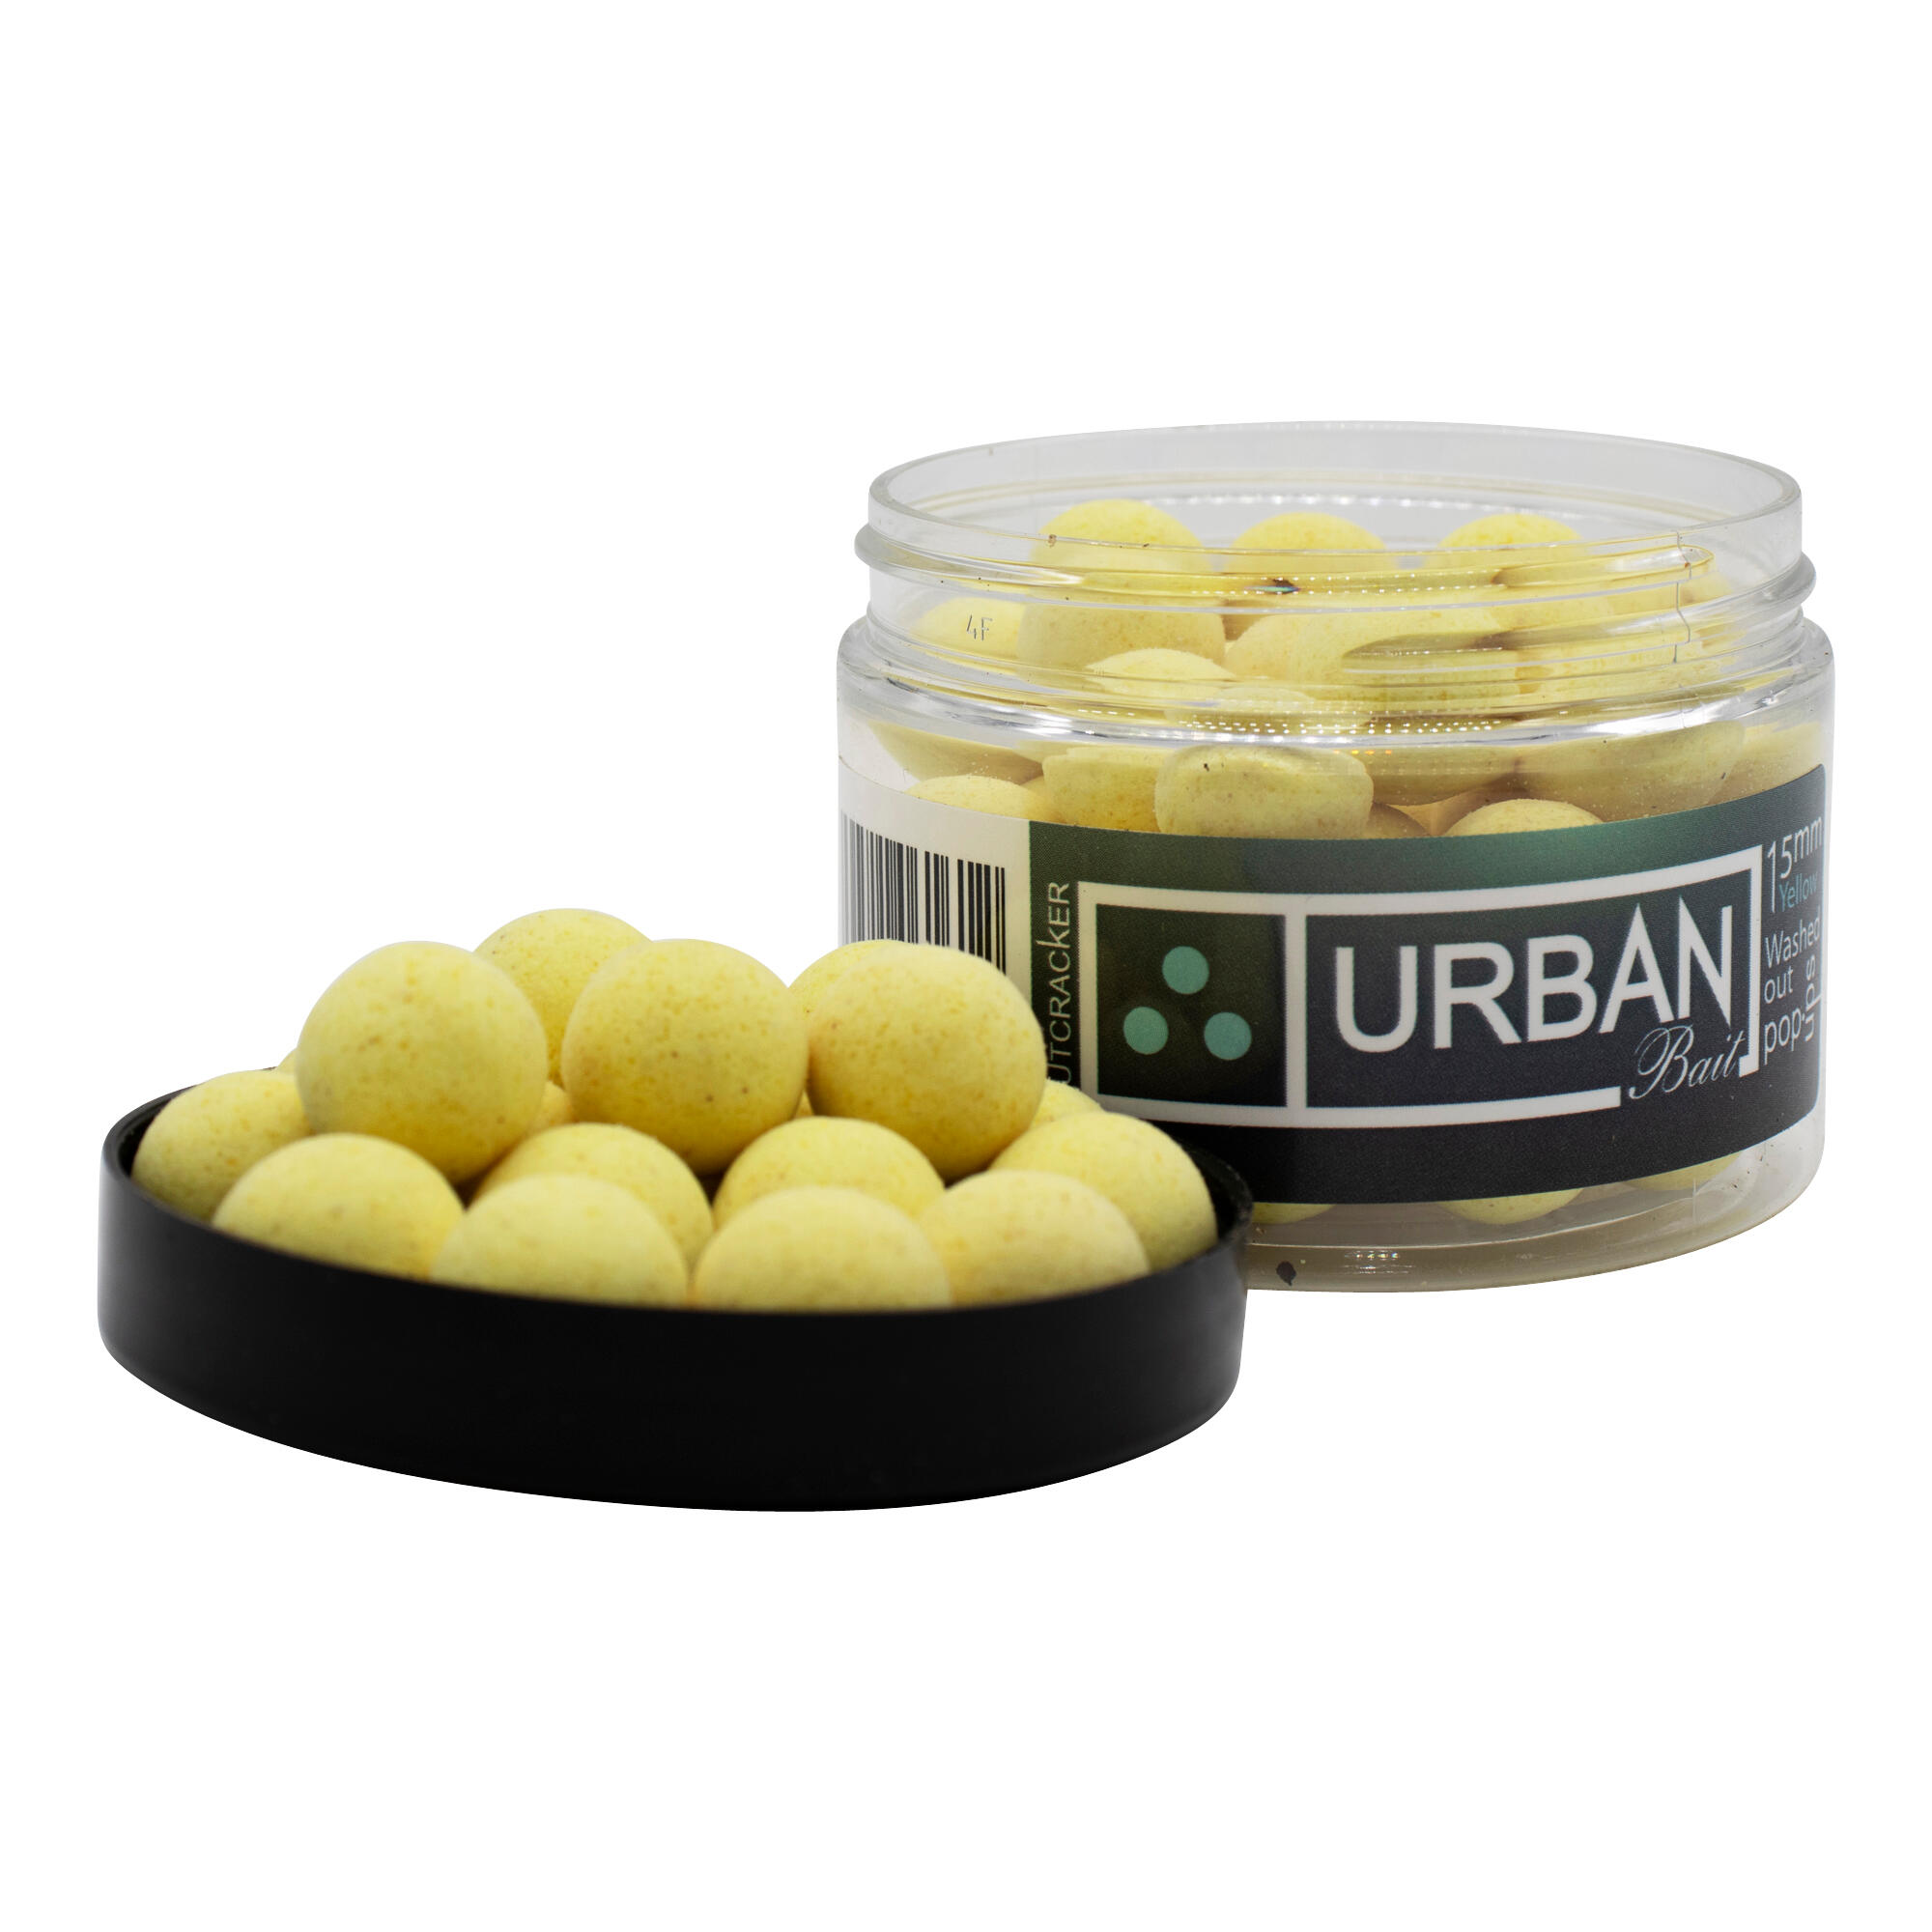 URBAN BAIT NUTCRACKER 15MM POP UPS WASHOUT YELLOW 1/1